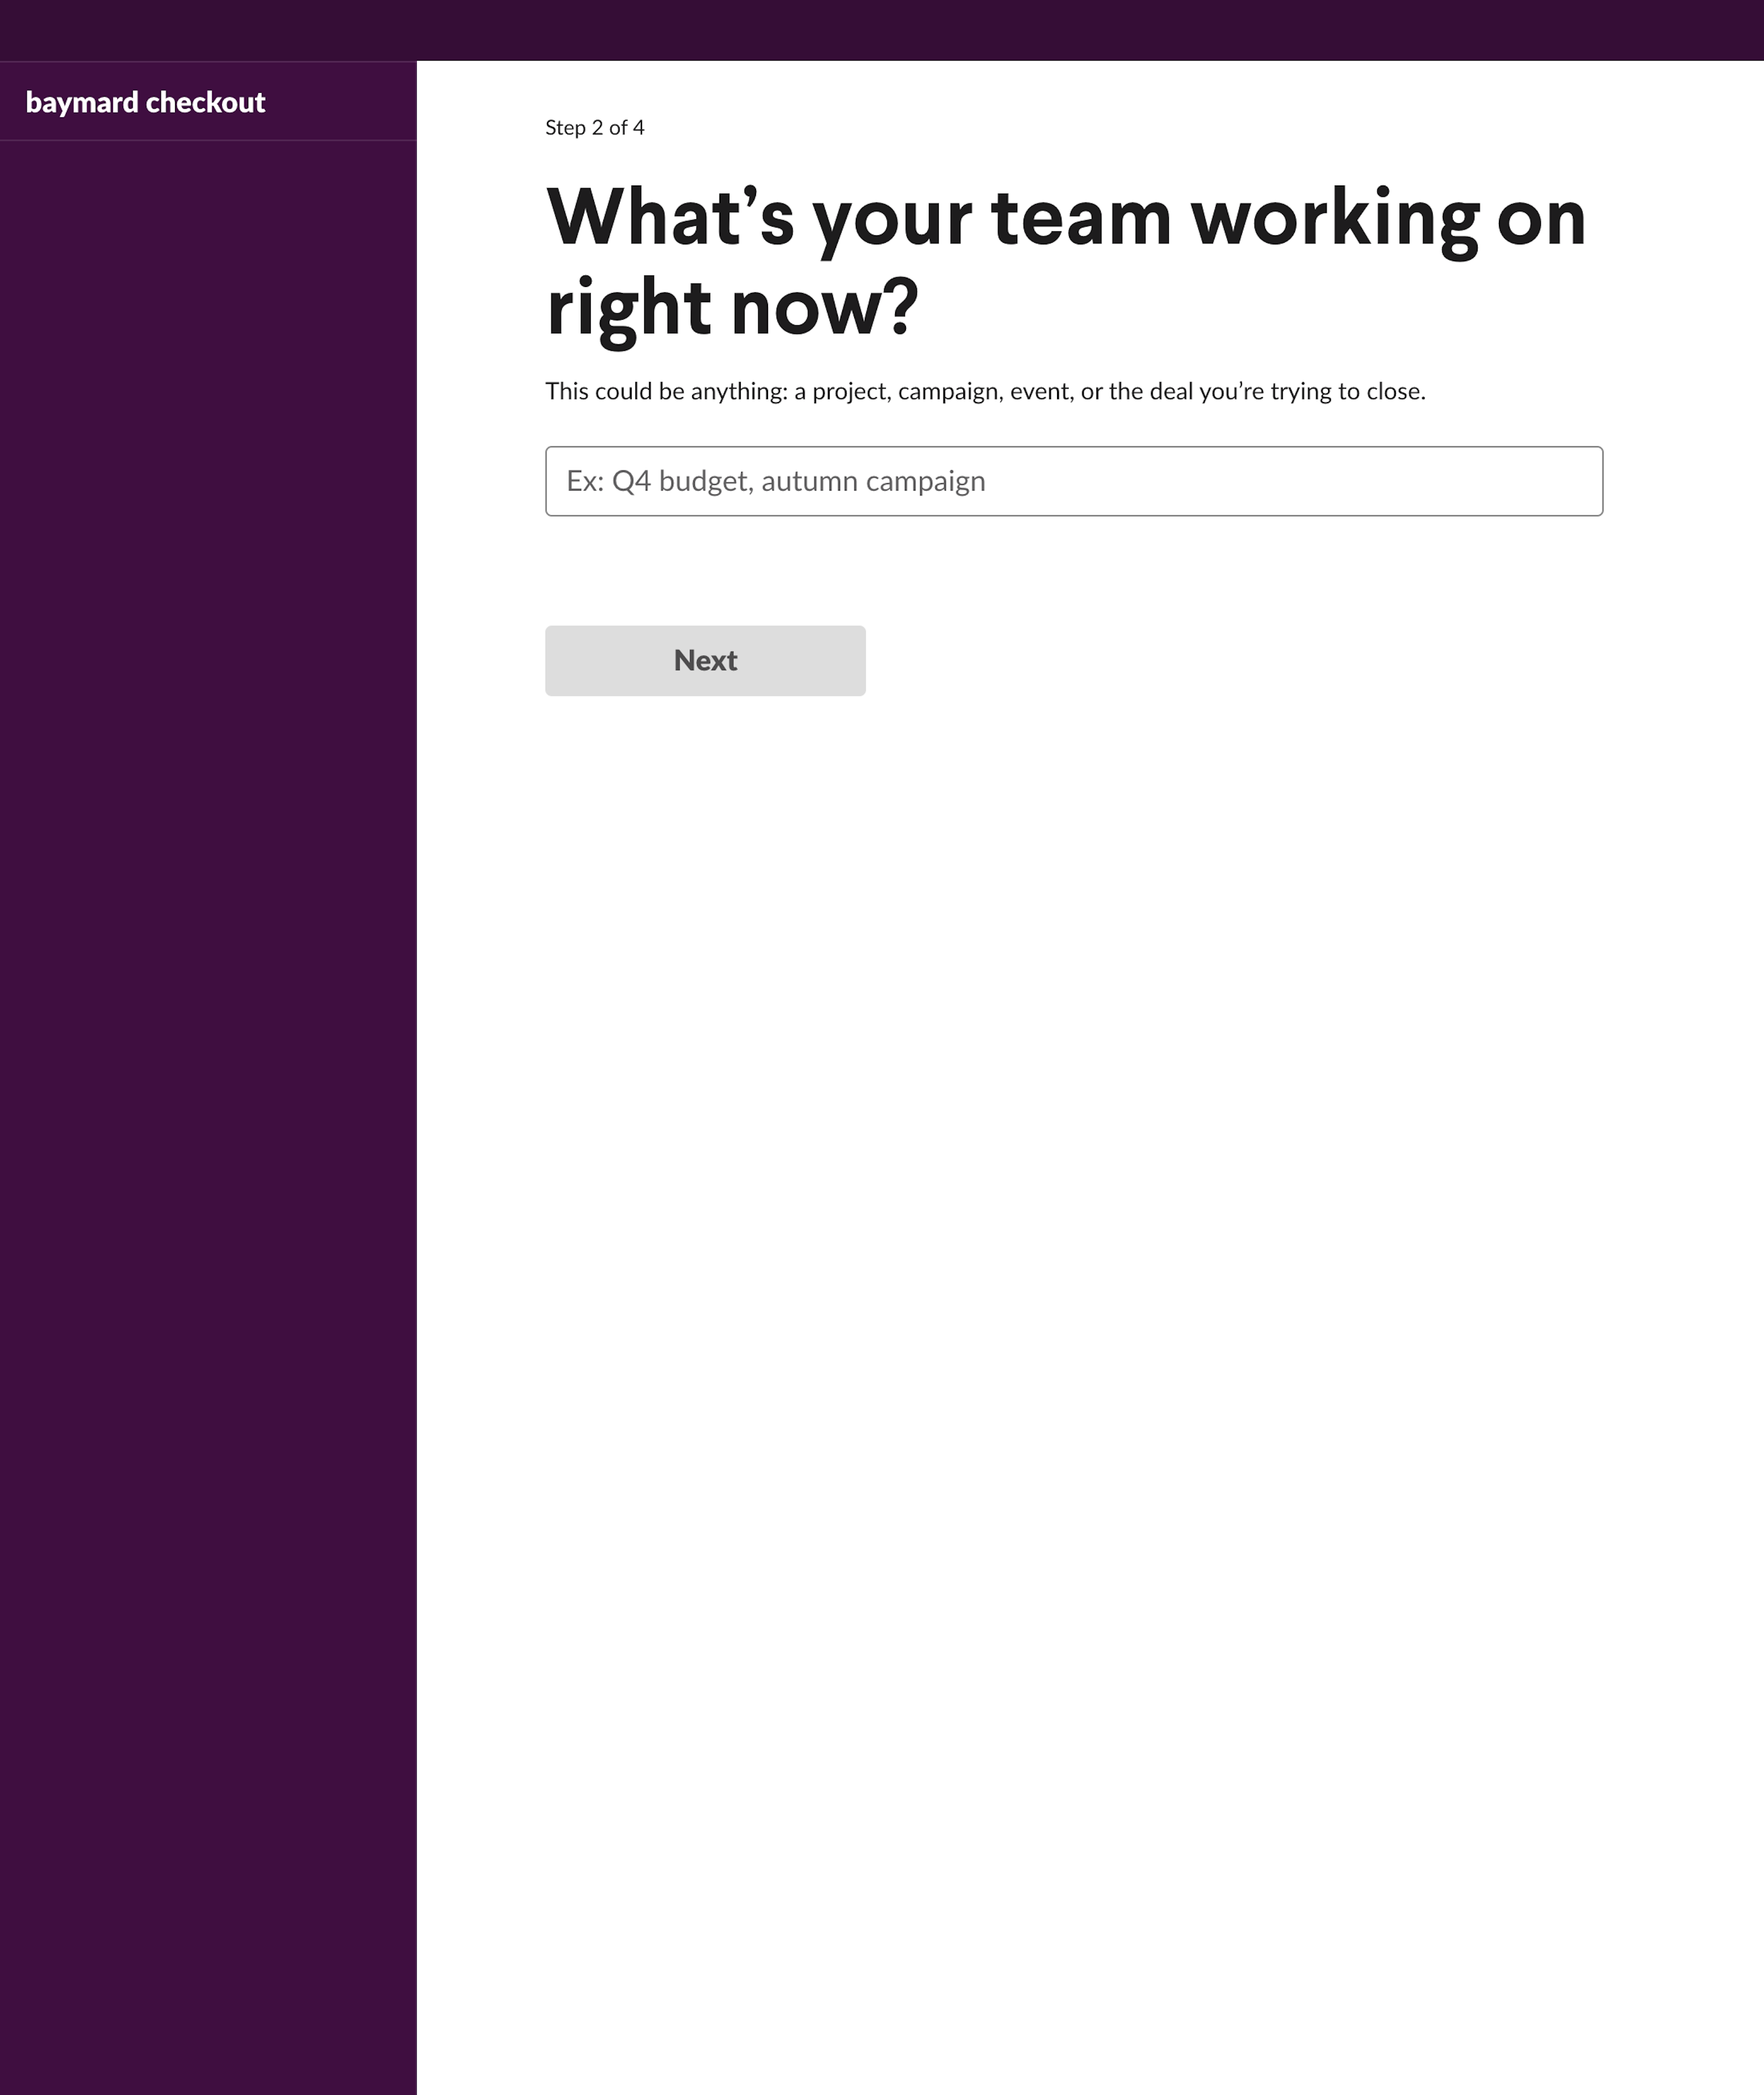 Desktop screenshot of Slack